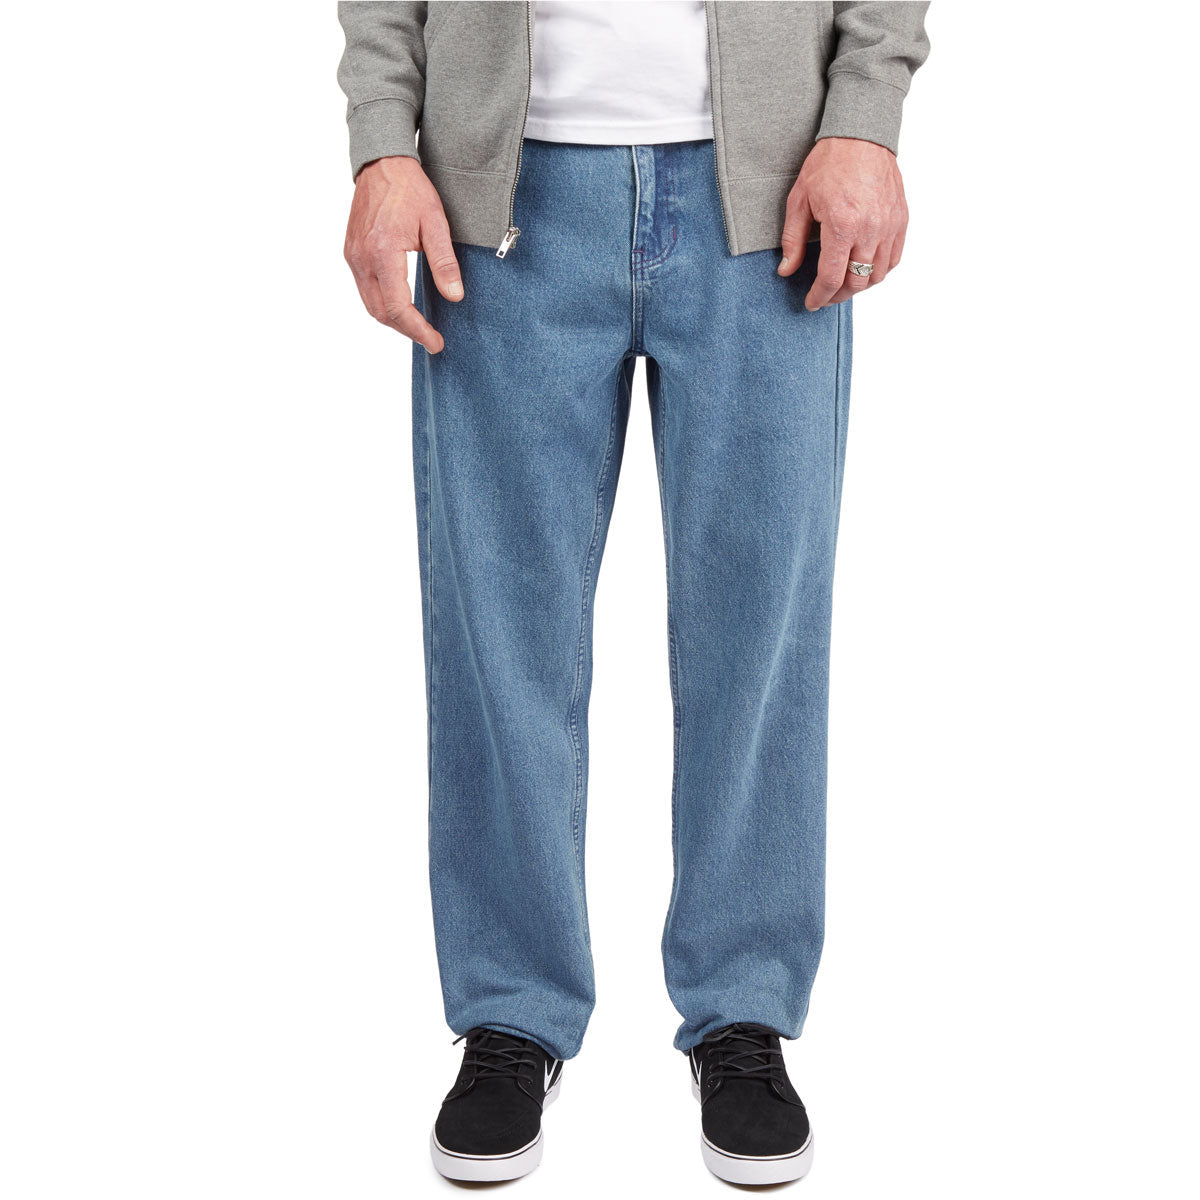 CCS Original Relaxed Taper Jeans - Medium Wash image 1